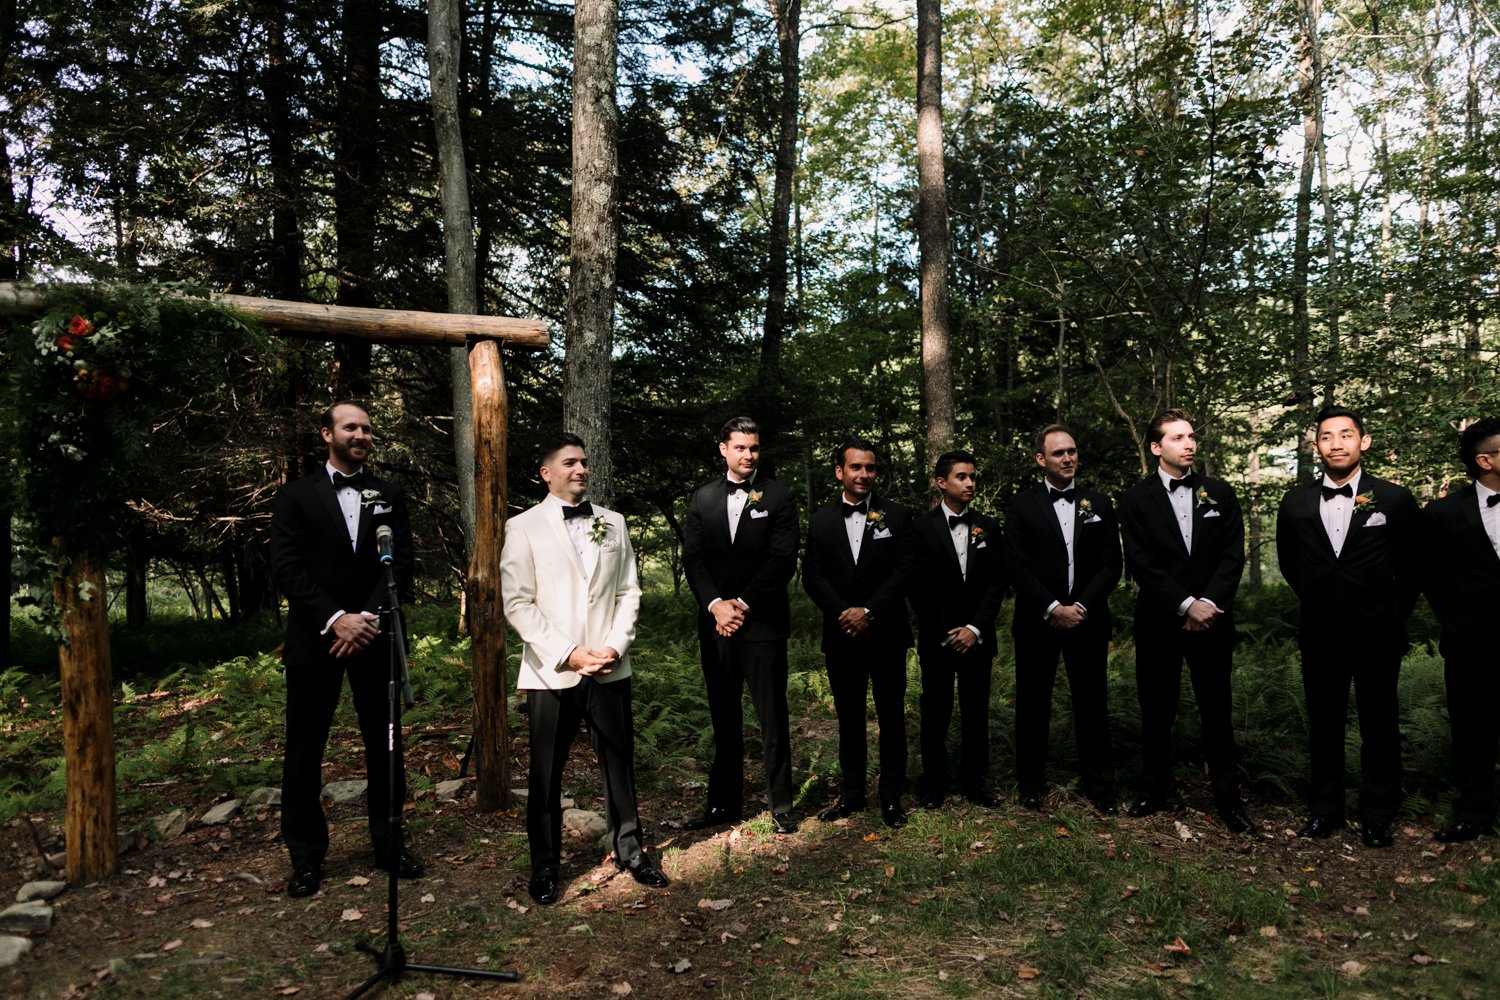 Handsome-Hollow-Catskills-wedding-photographer-53.jpg